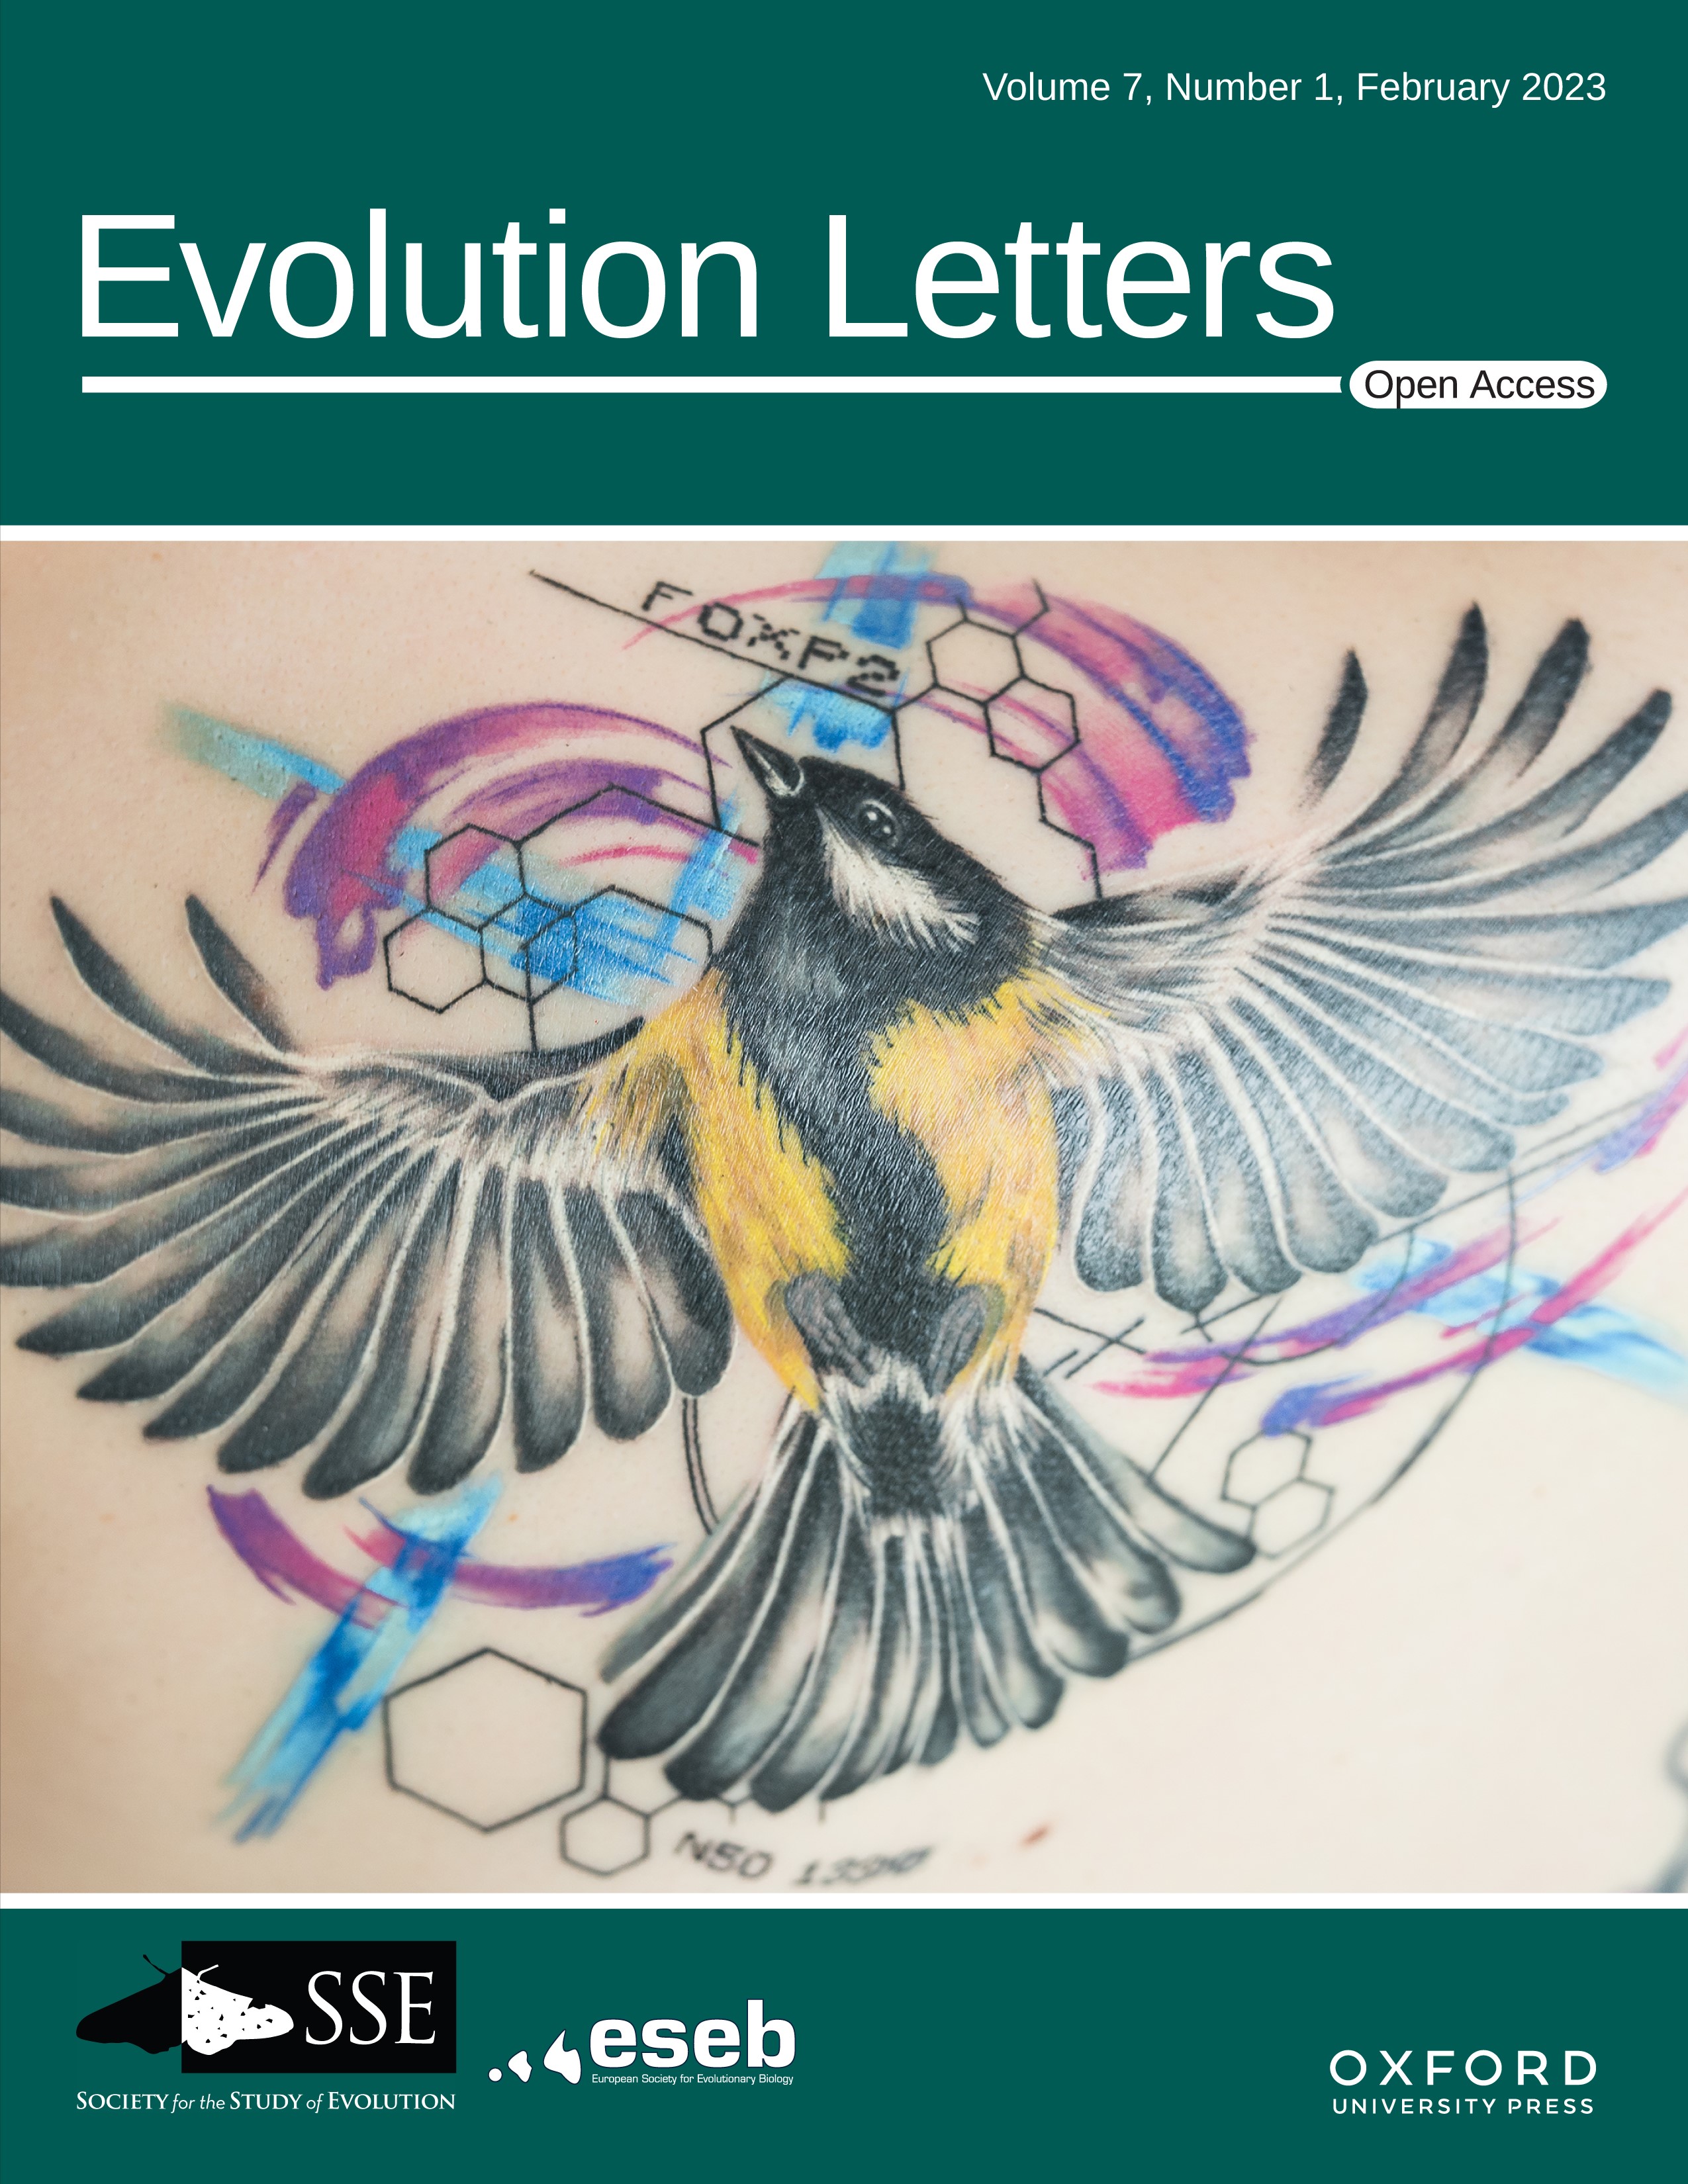 Evolution Letters journal cover